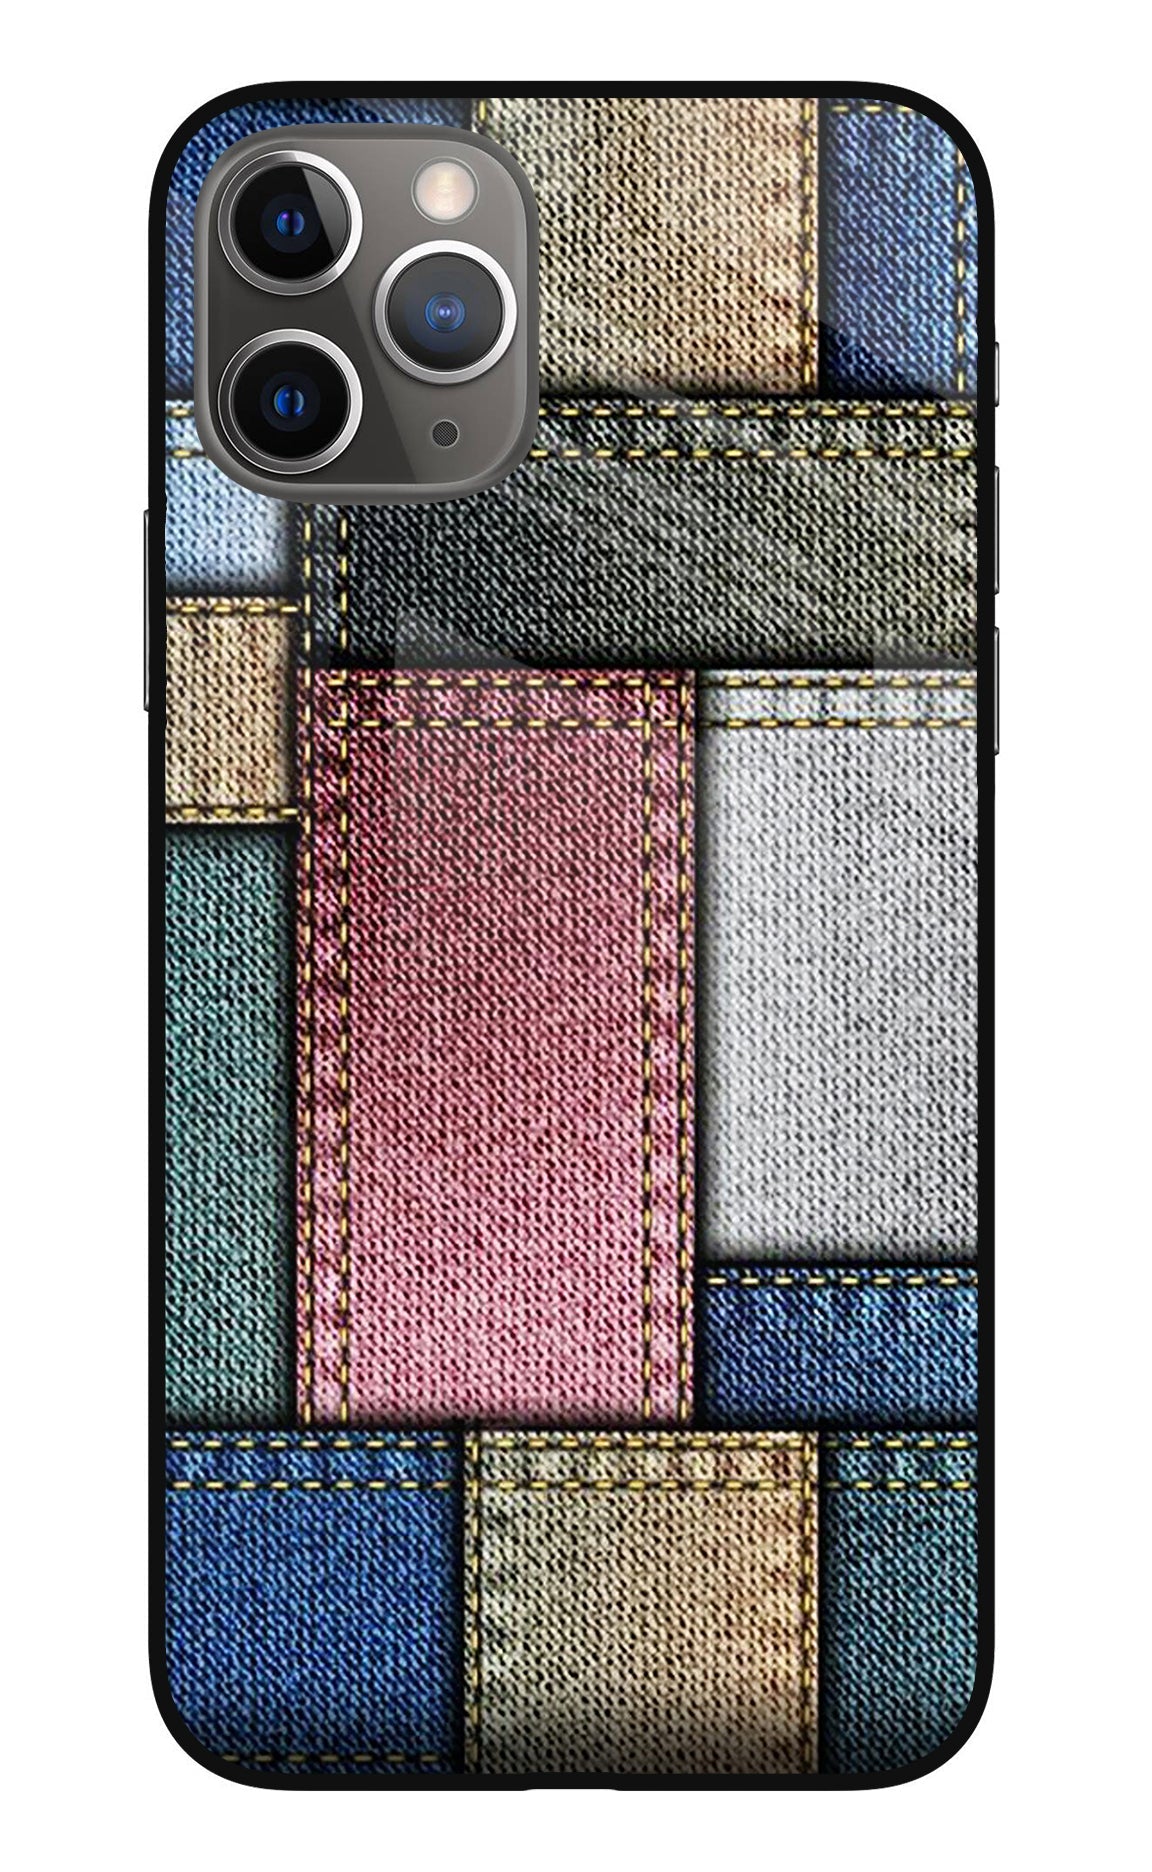 Multicolor Jeans iPhone 11 Pro Max Glass Case